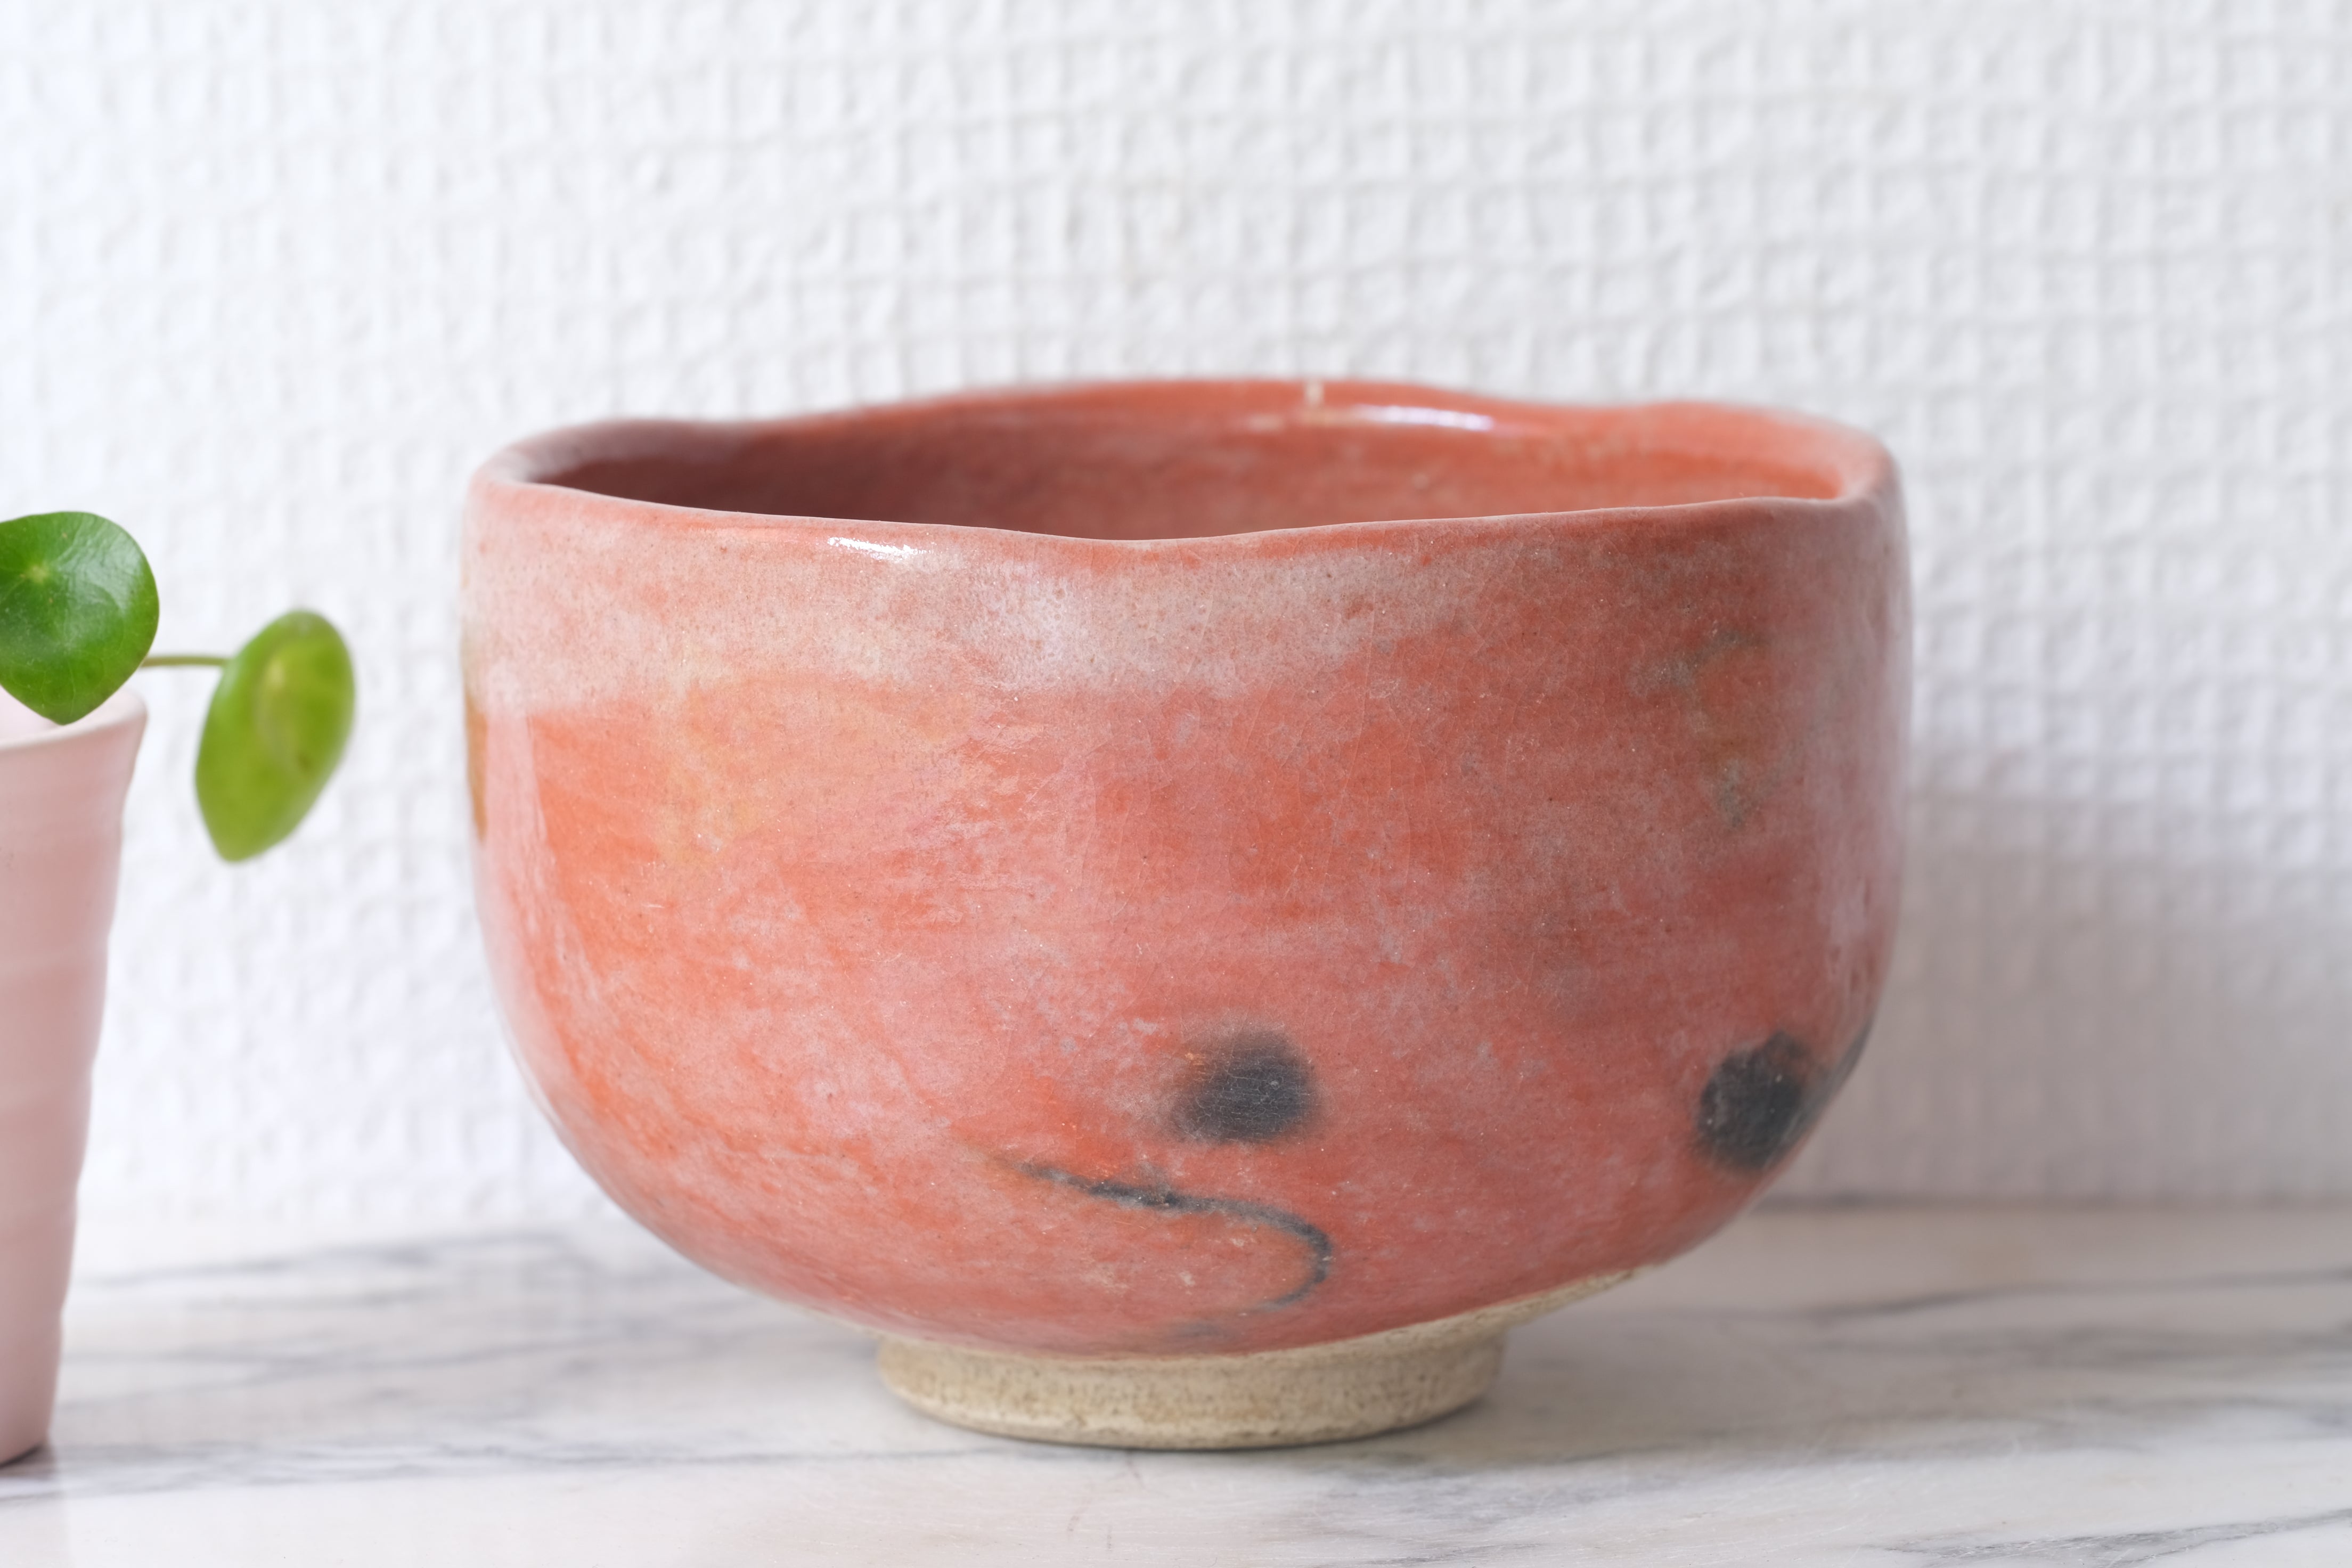 Japanese Ceramic Tea Bowl by Eiraku Zengoro 栄楽作 (1823-1896) | Chawan | Kiyomizu-yaki Ware (清水焼) | 7,5 cm